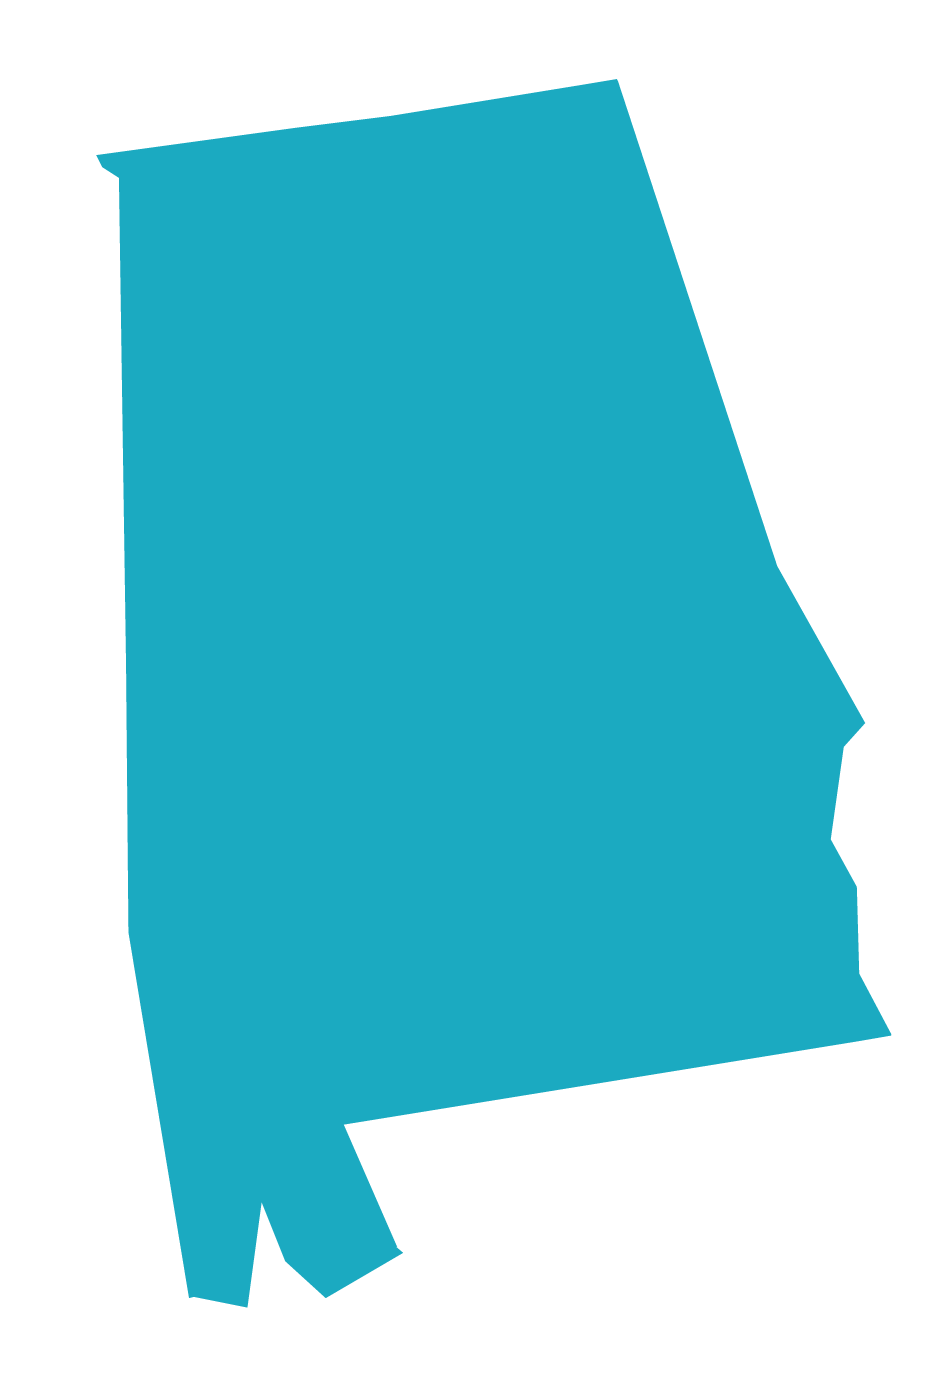 Alabama State Logo